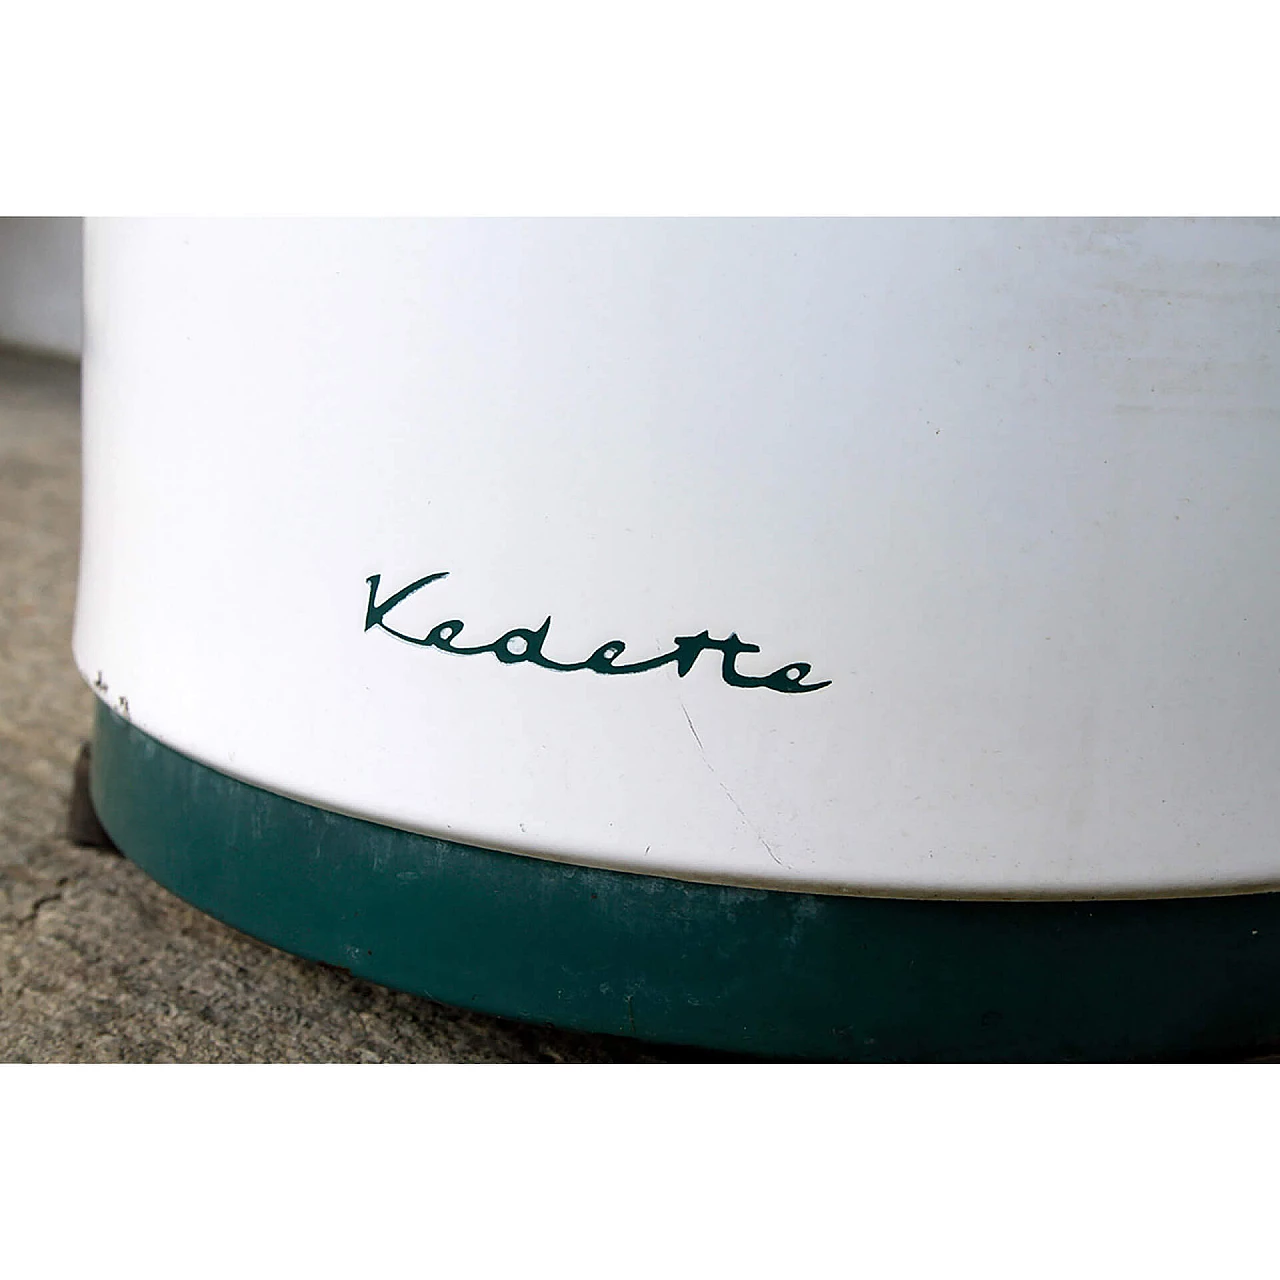 White Primus Kedette vintage washing machine, Italy, 50s 1113378